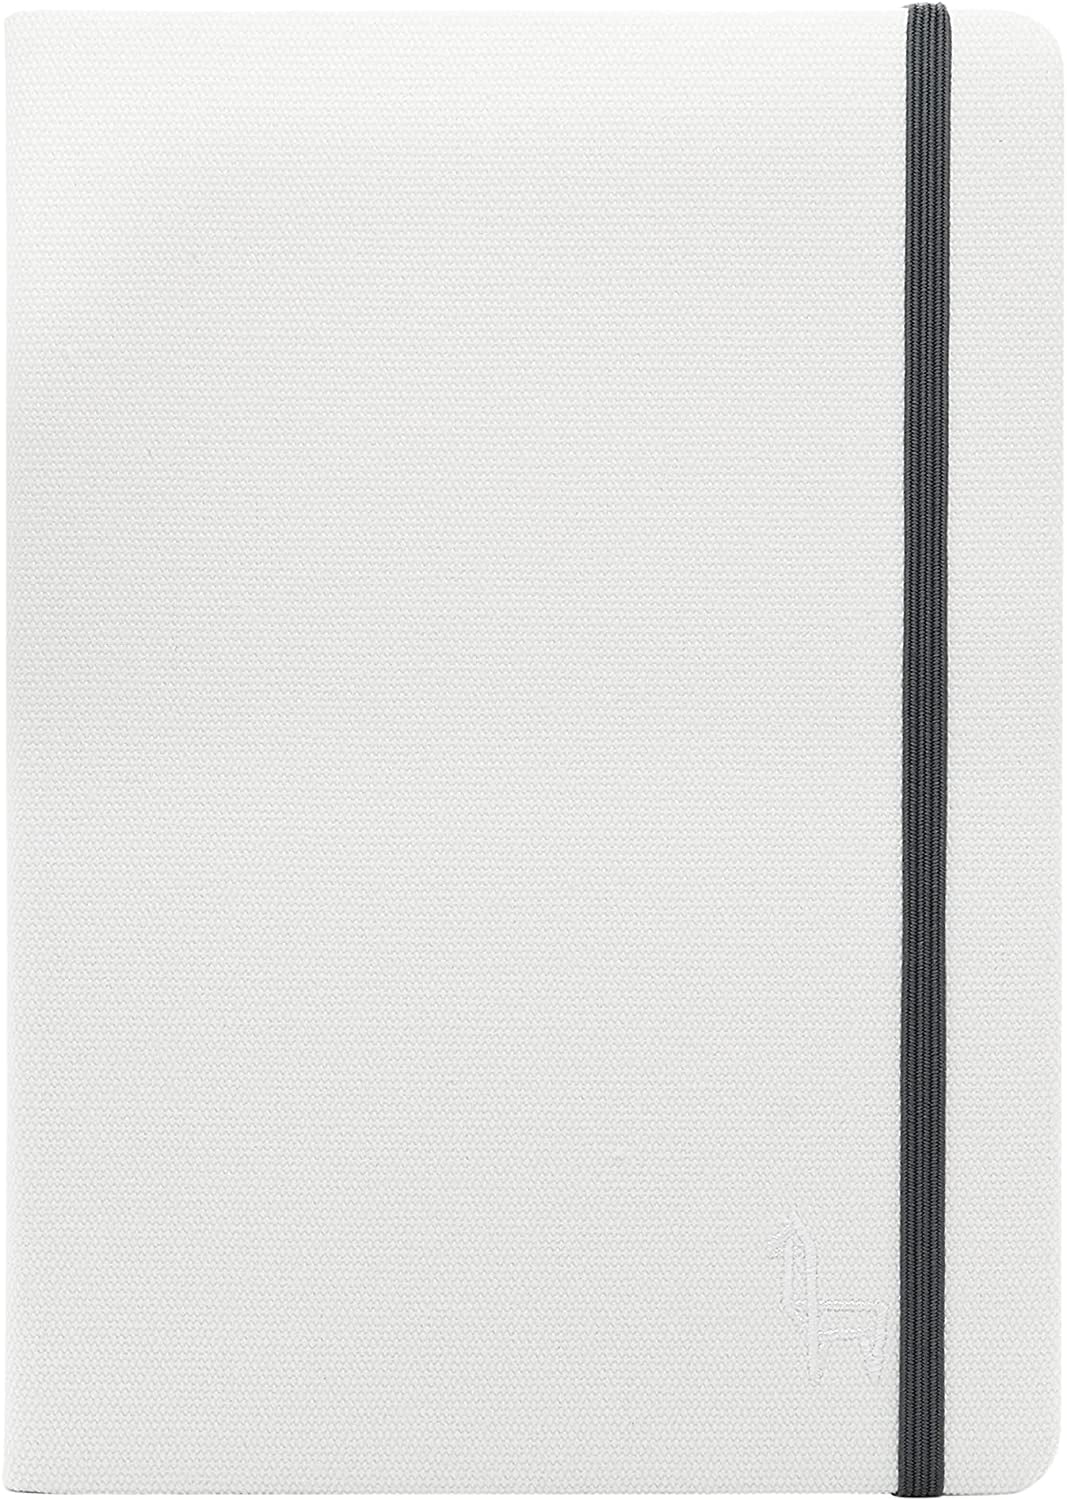 Etchr Mixed Media Hardbound Sketchbook - B5, 6.9 x 9.8 Cold Press, Portrait